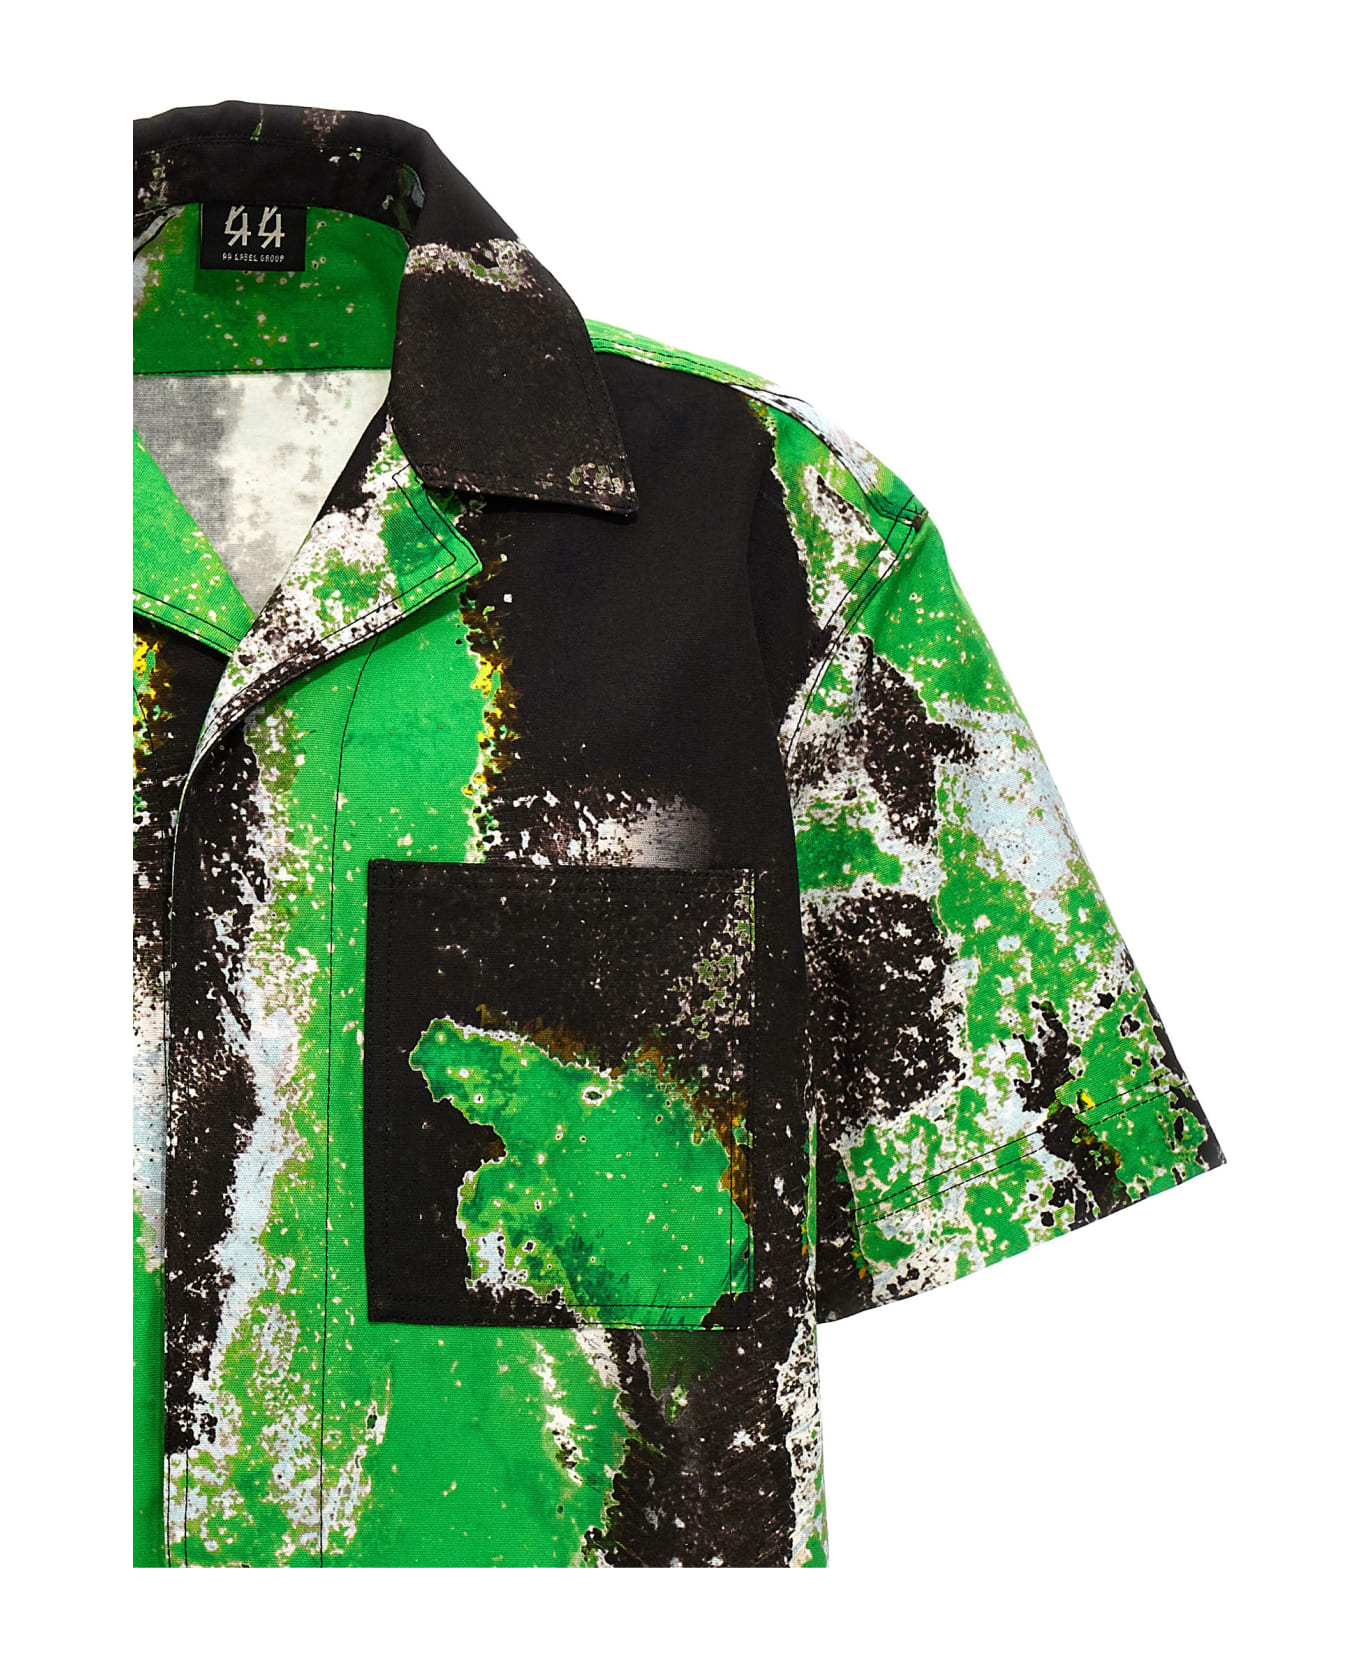 44 Label Group 'corrosive' Shirt - Multicolor